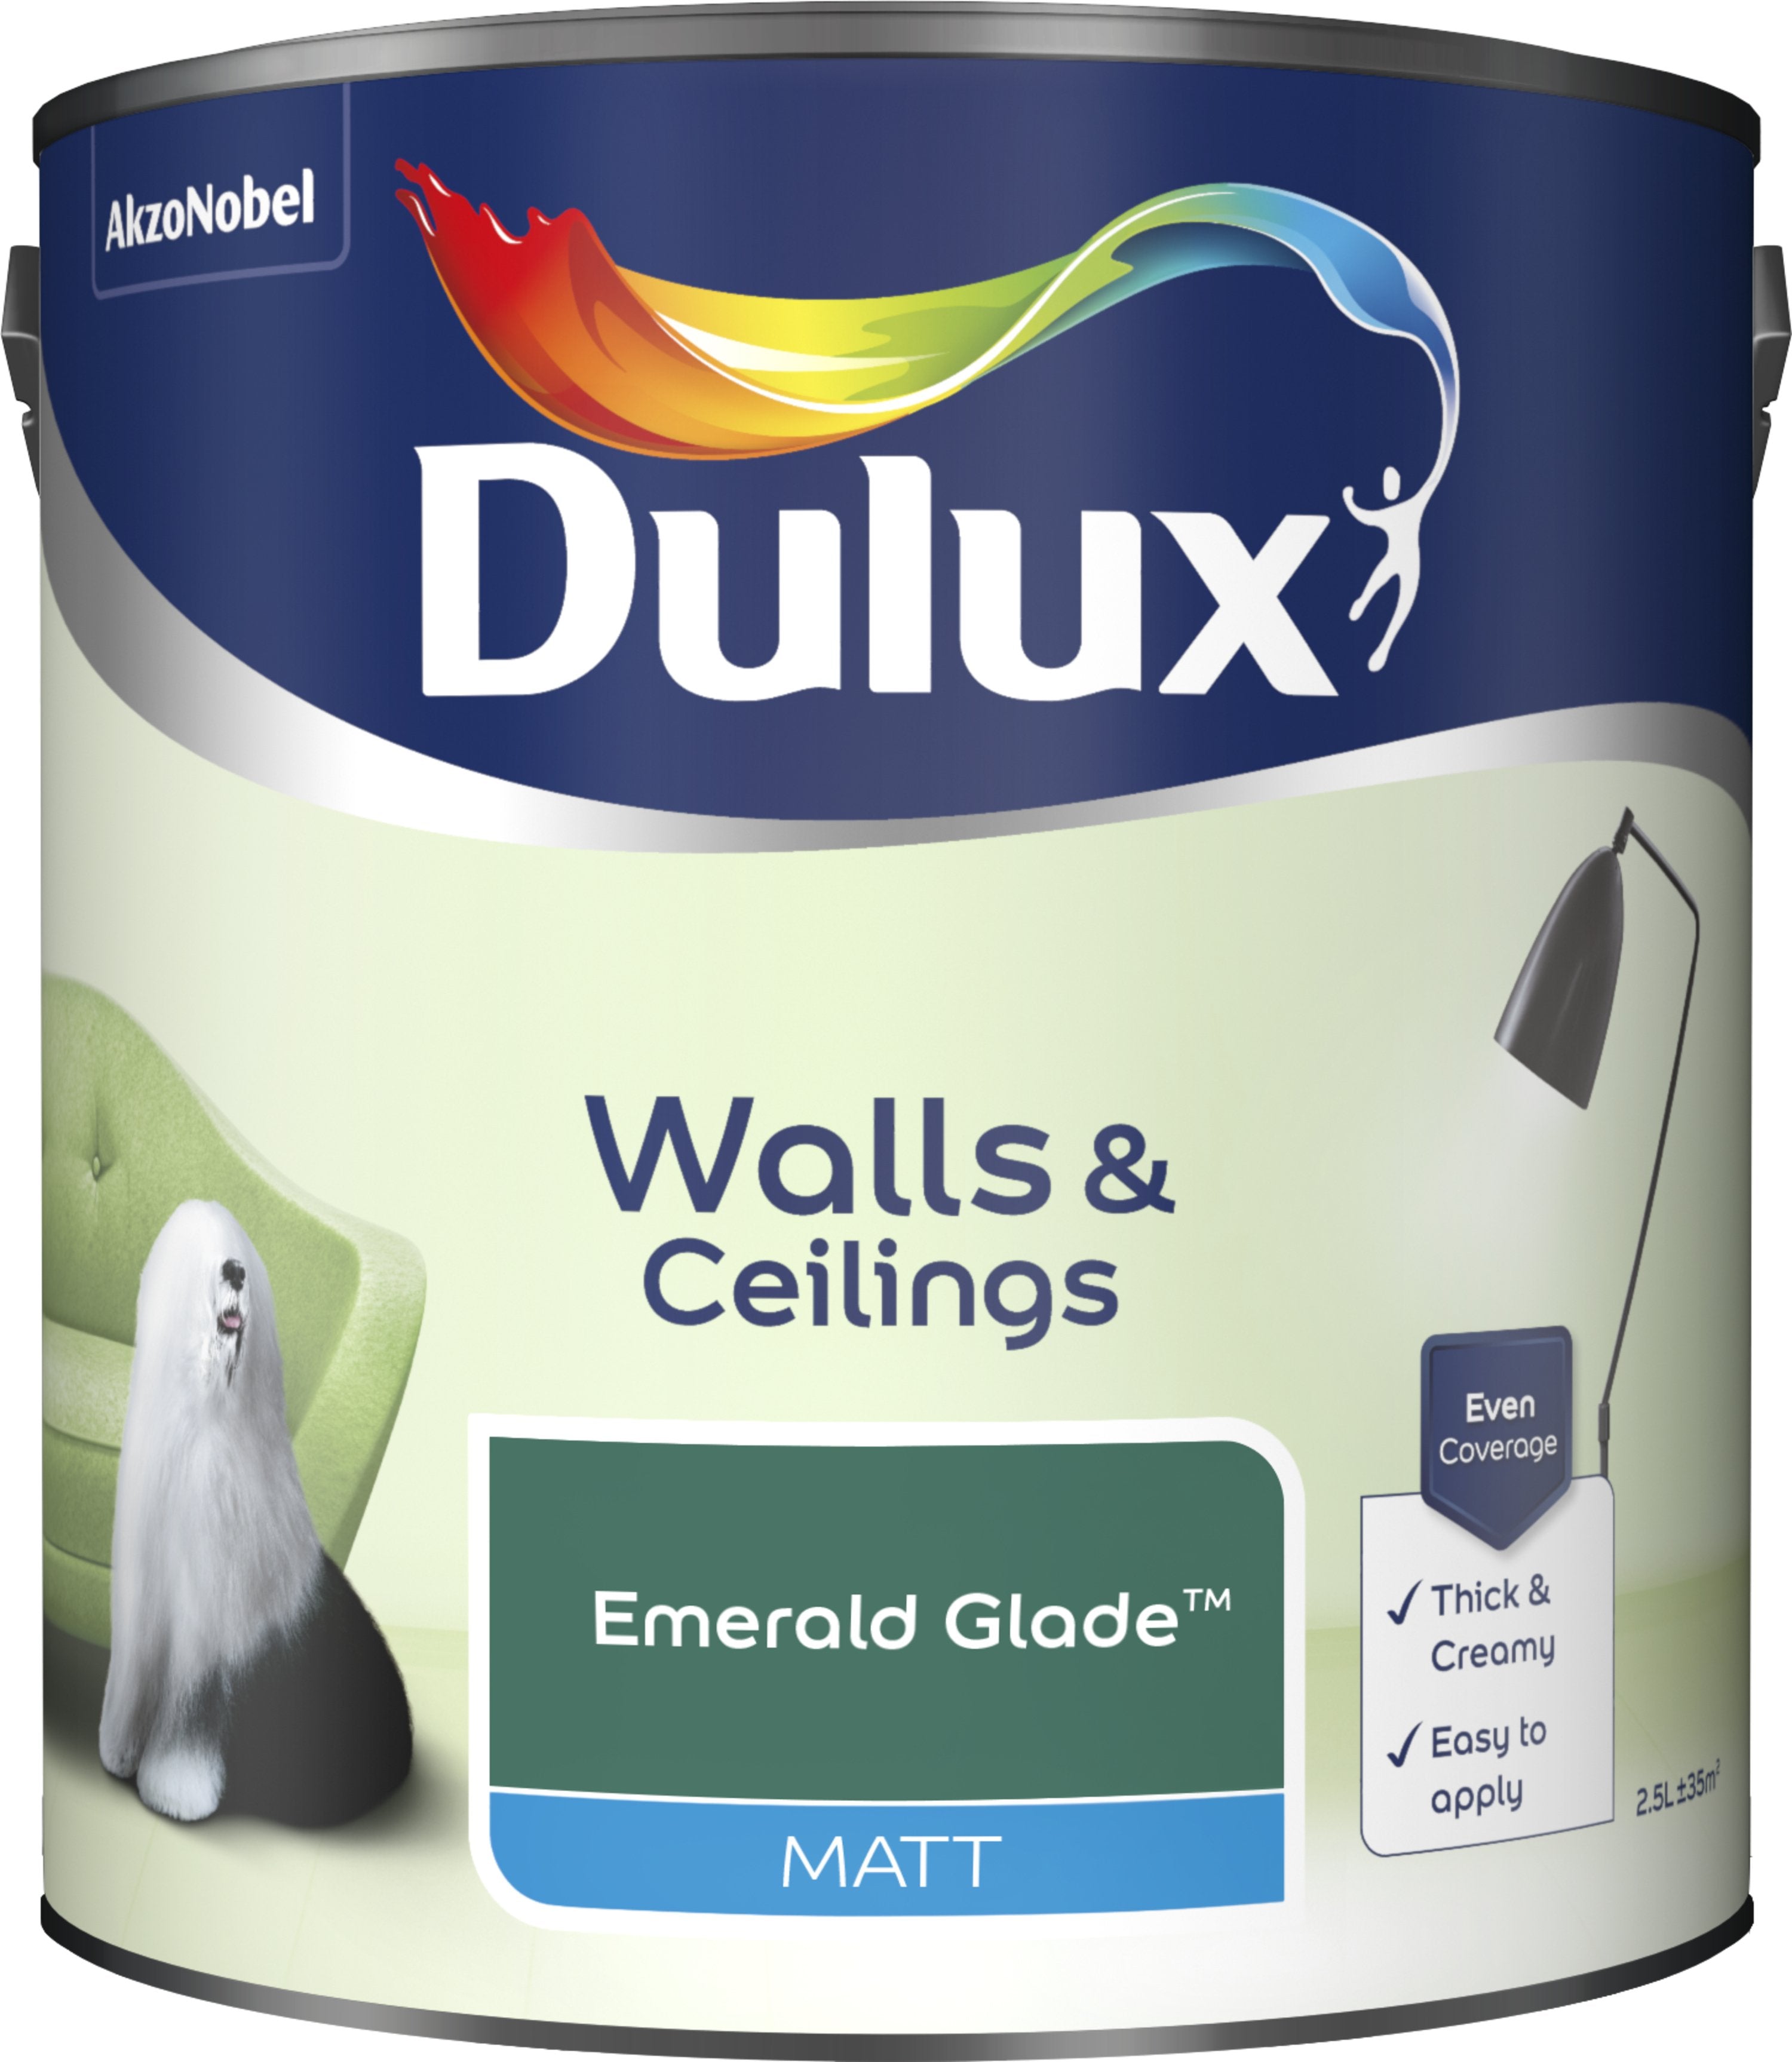 Dulux Matt Emulsion Paint For Walls And Ceilings - Emerald Glade 2.5L Garden & Diy  Home